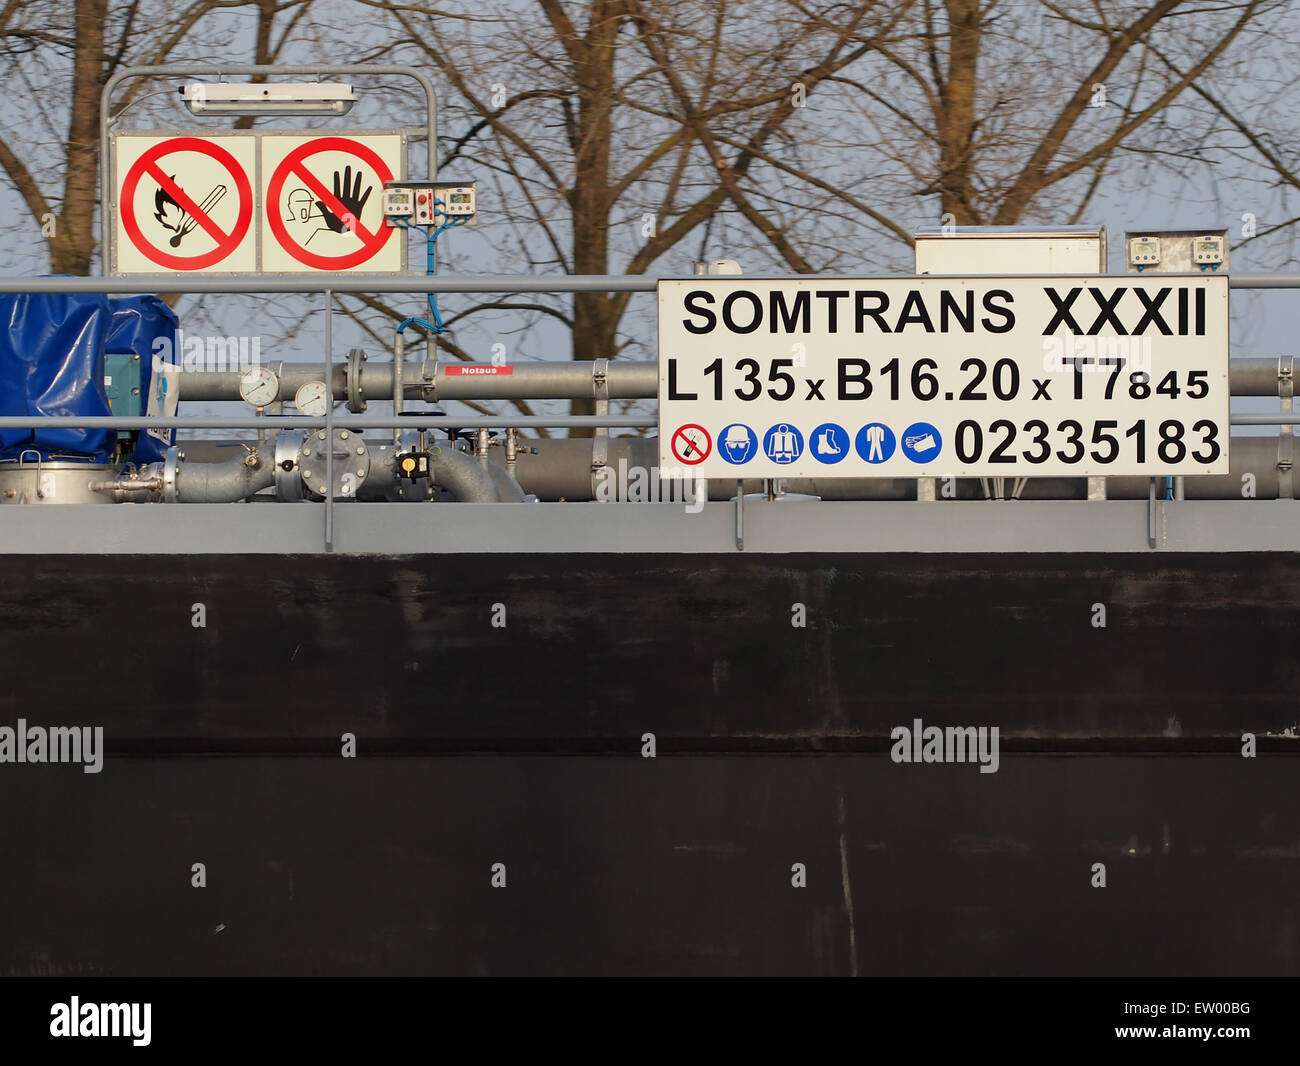 Somtrans XXXII - ENI 02335183, Amsterdam-Rhein, pic4 Stockfoto